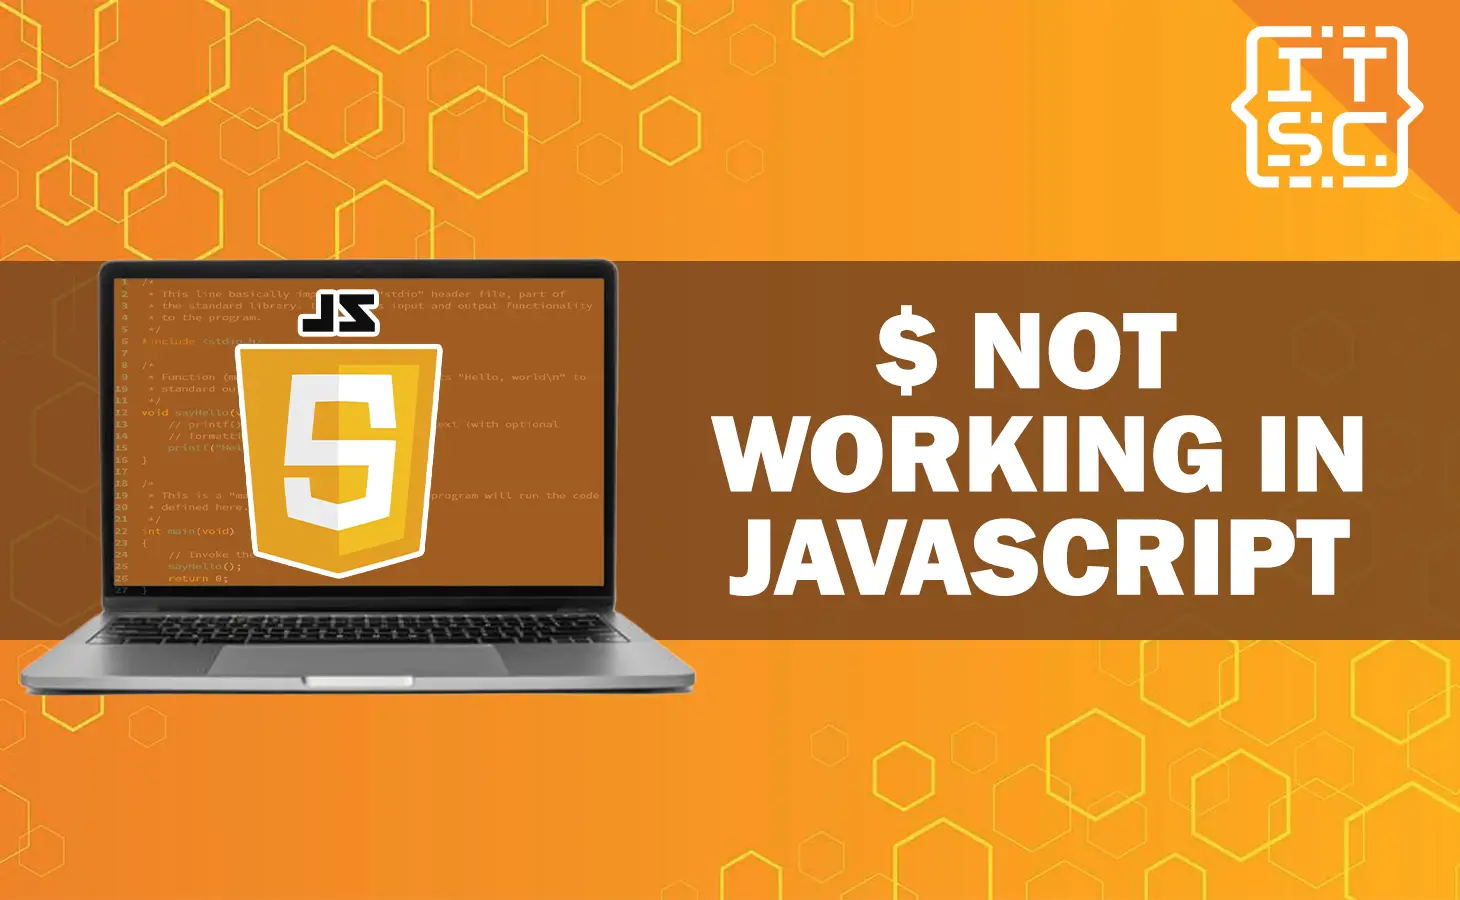 $ Not Working in JavaScript